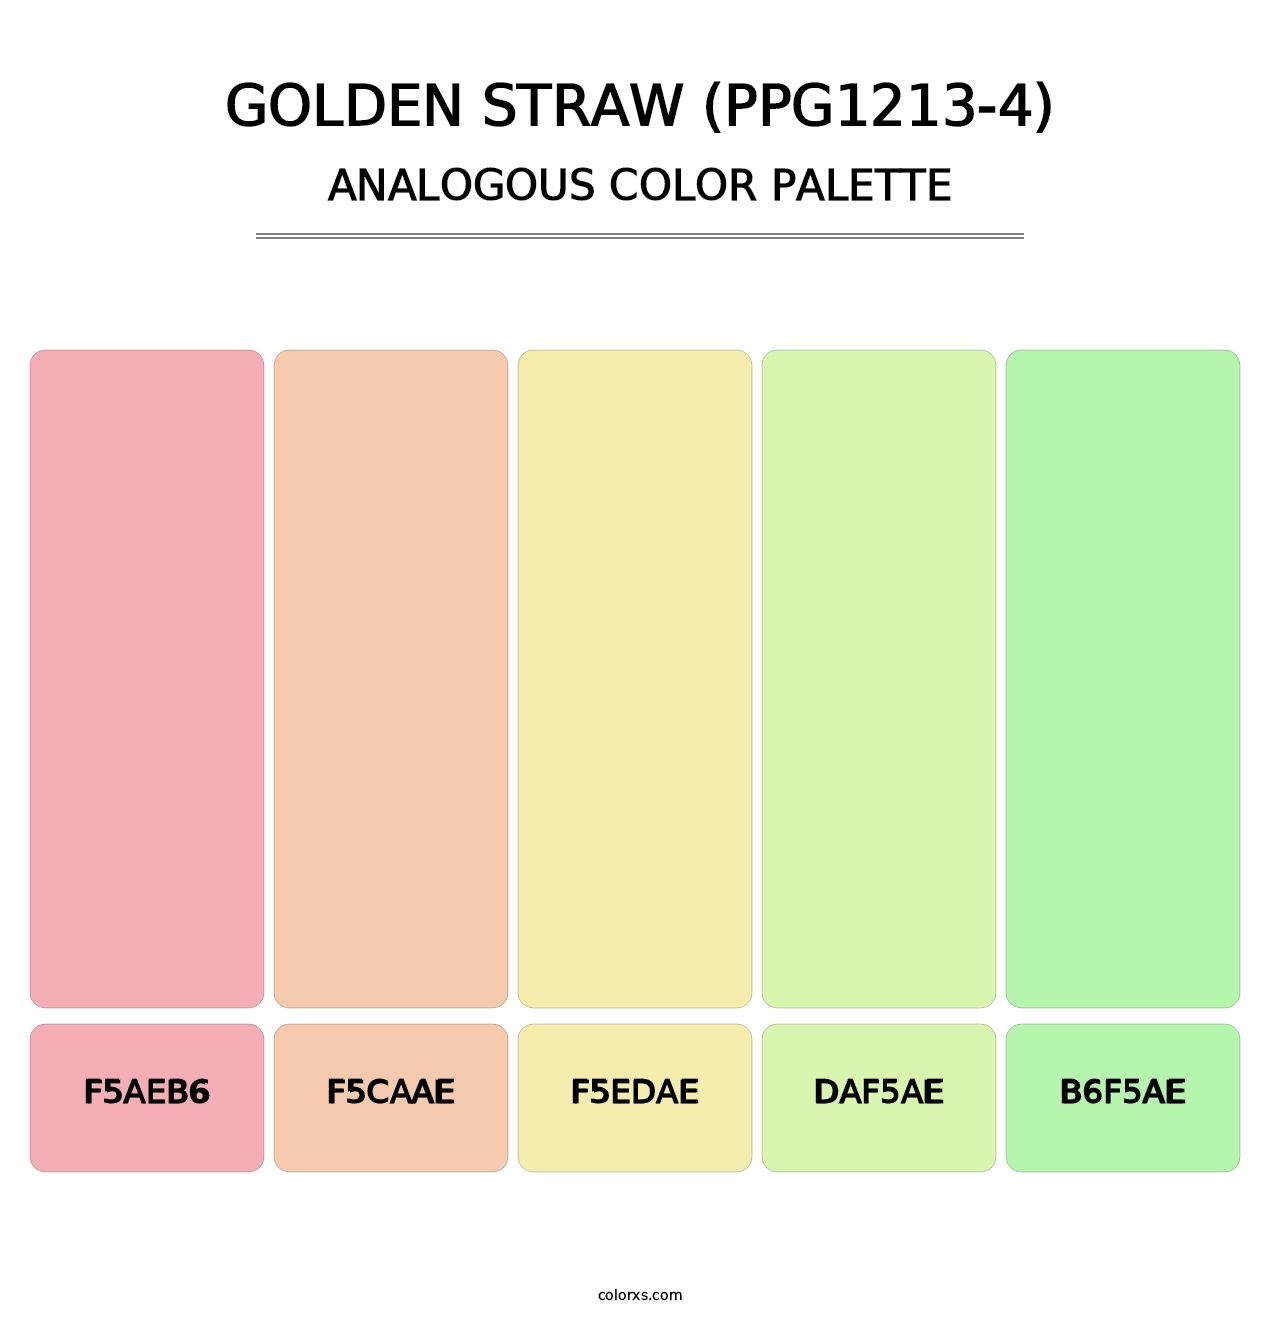 Golden Straw (PPG1213-4) - Analogous Color Palette